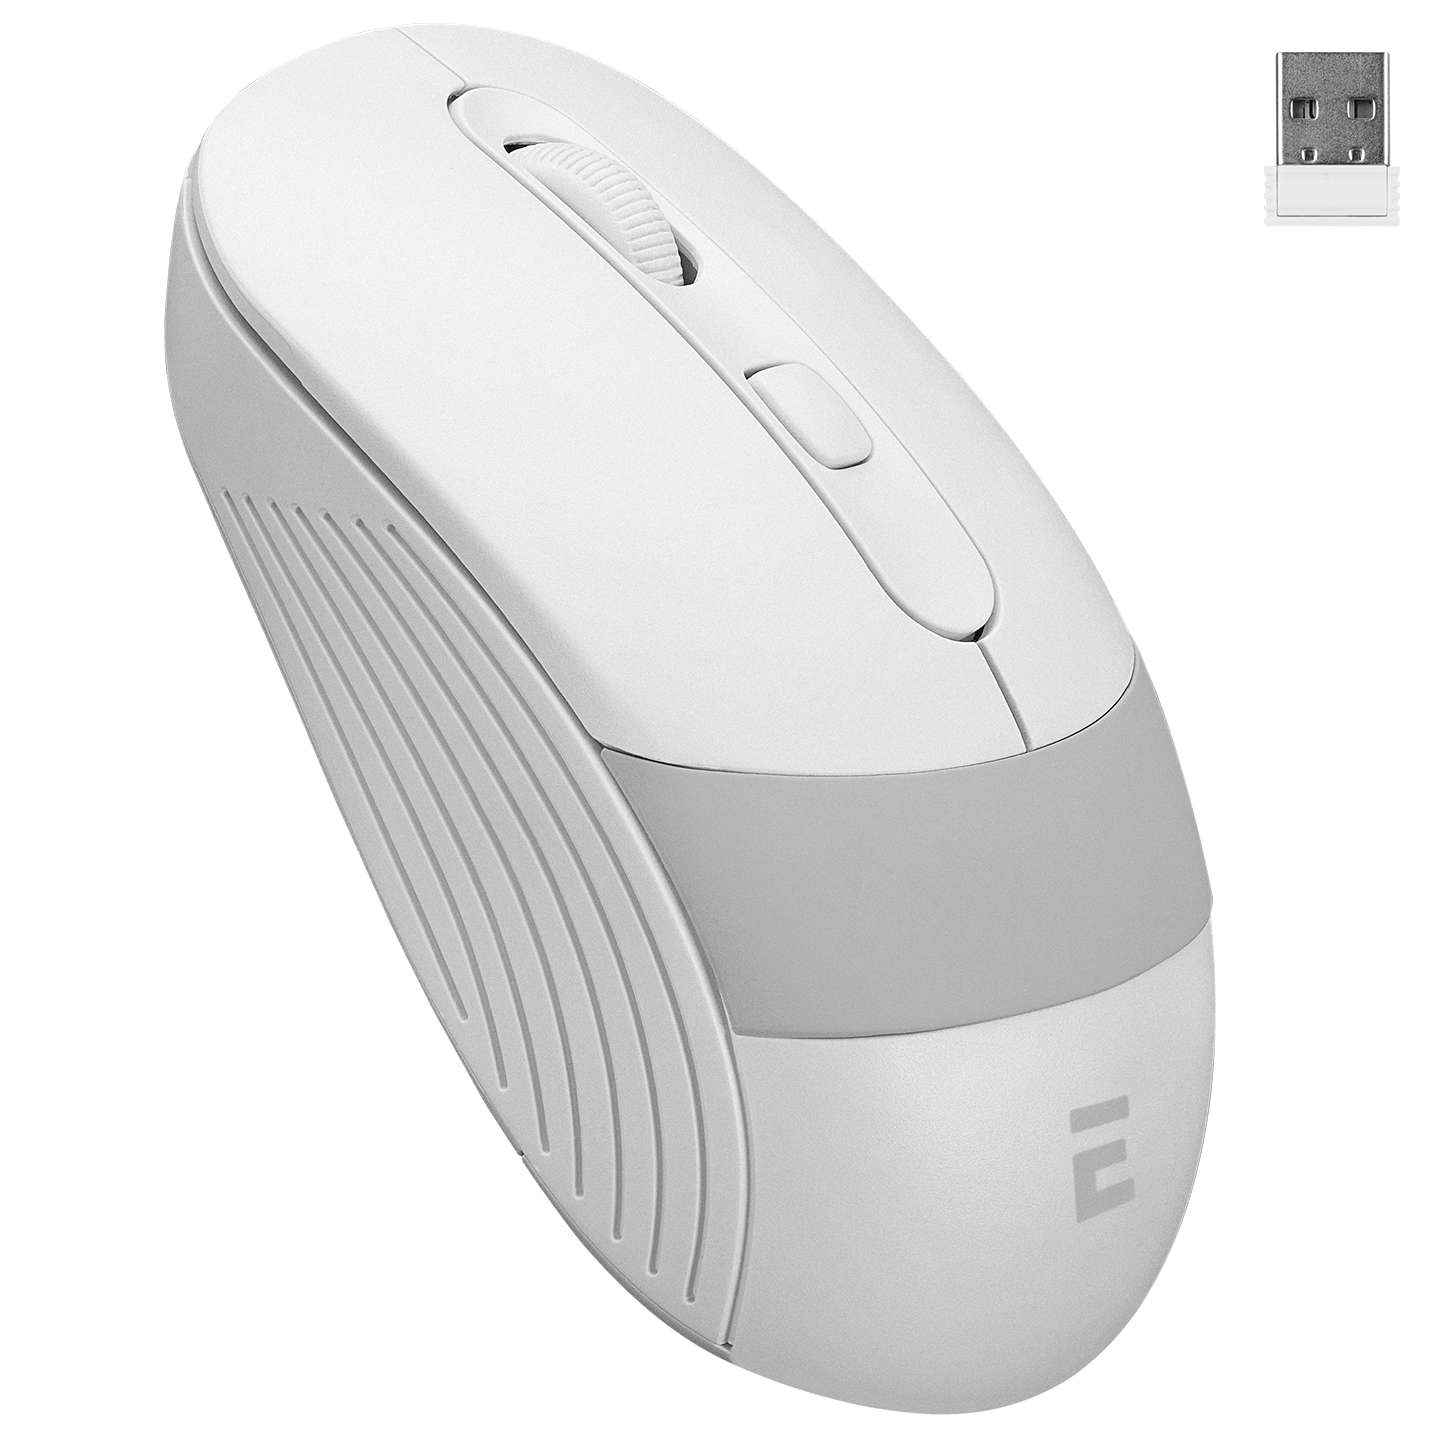 Everest SM-18 Usb Beyaz/Gri 2.4Ghz Optik Kablosuz Mouse